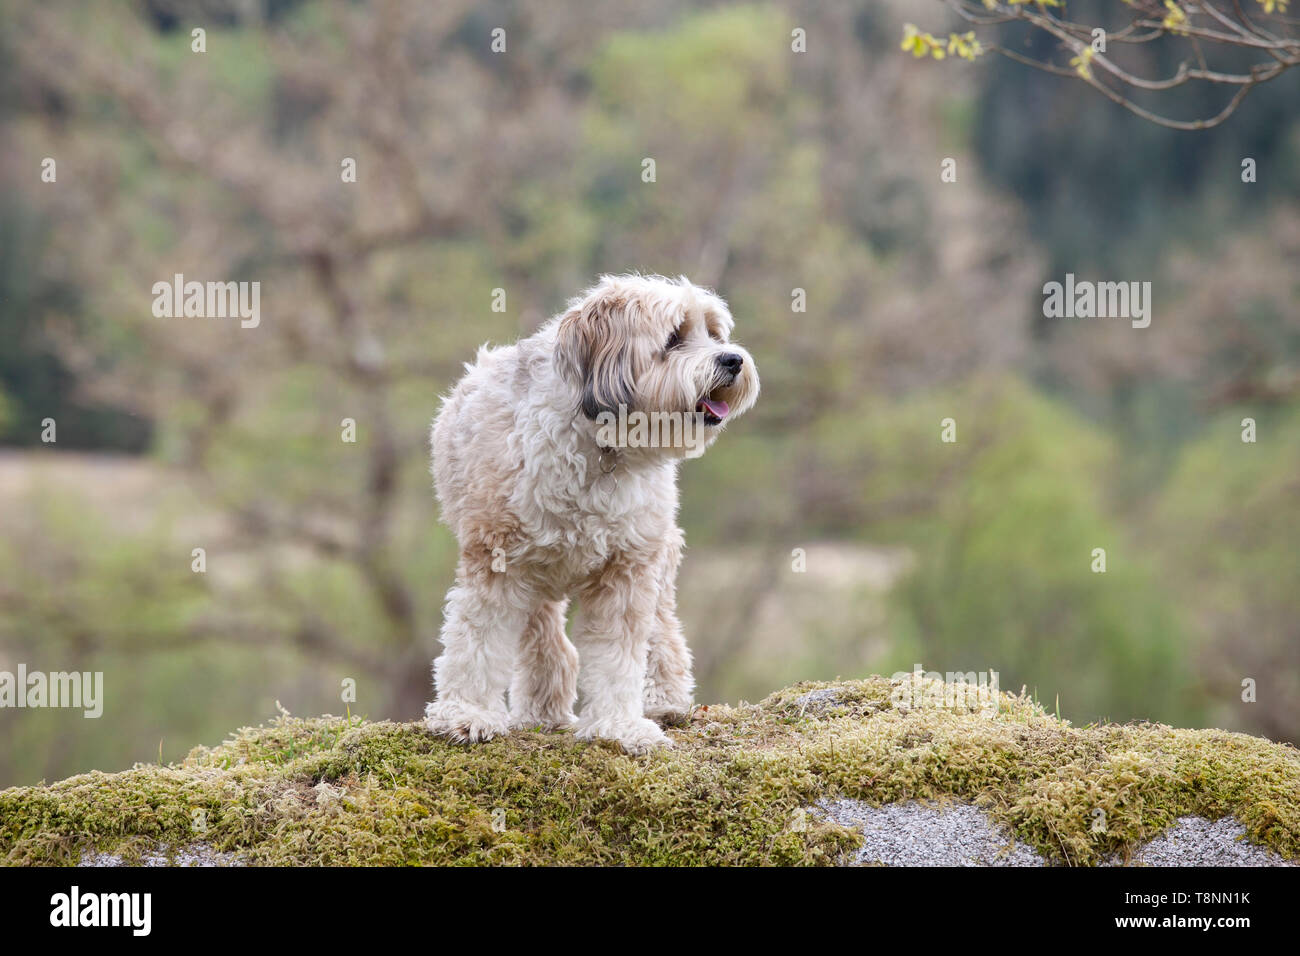 Perro de tibet fotografías e imágenes de alta resolución - Alamy